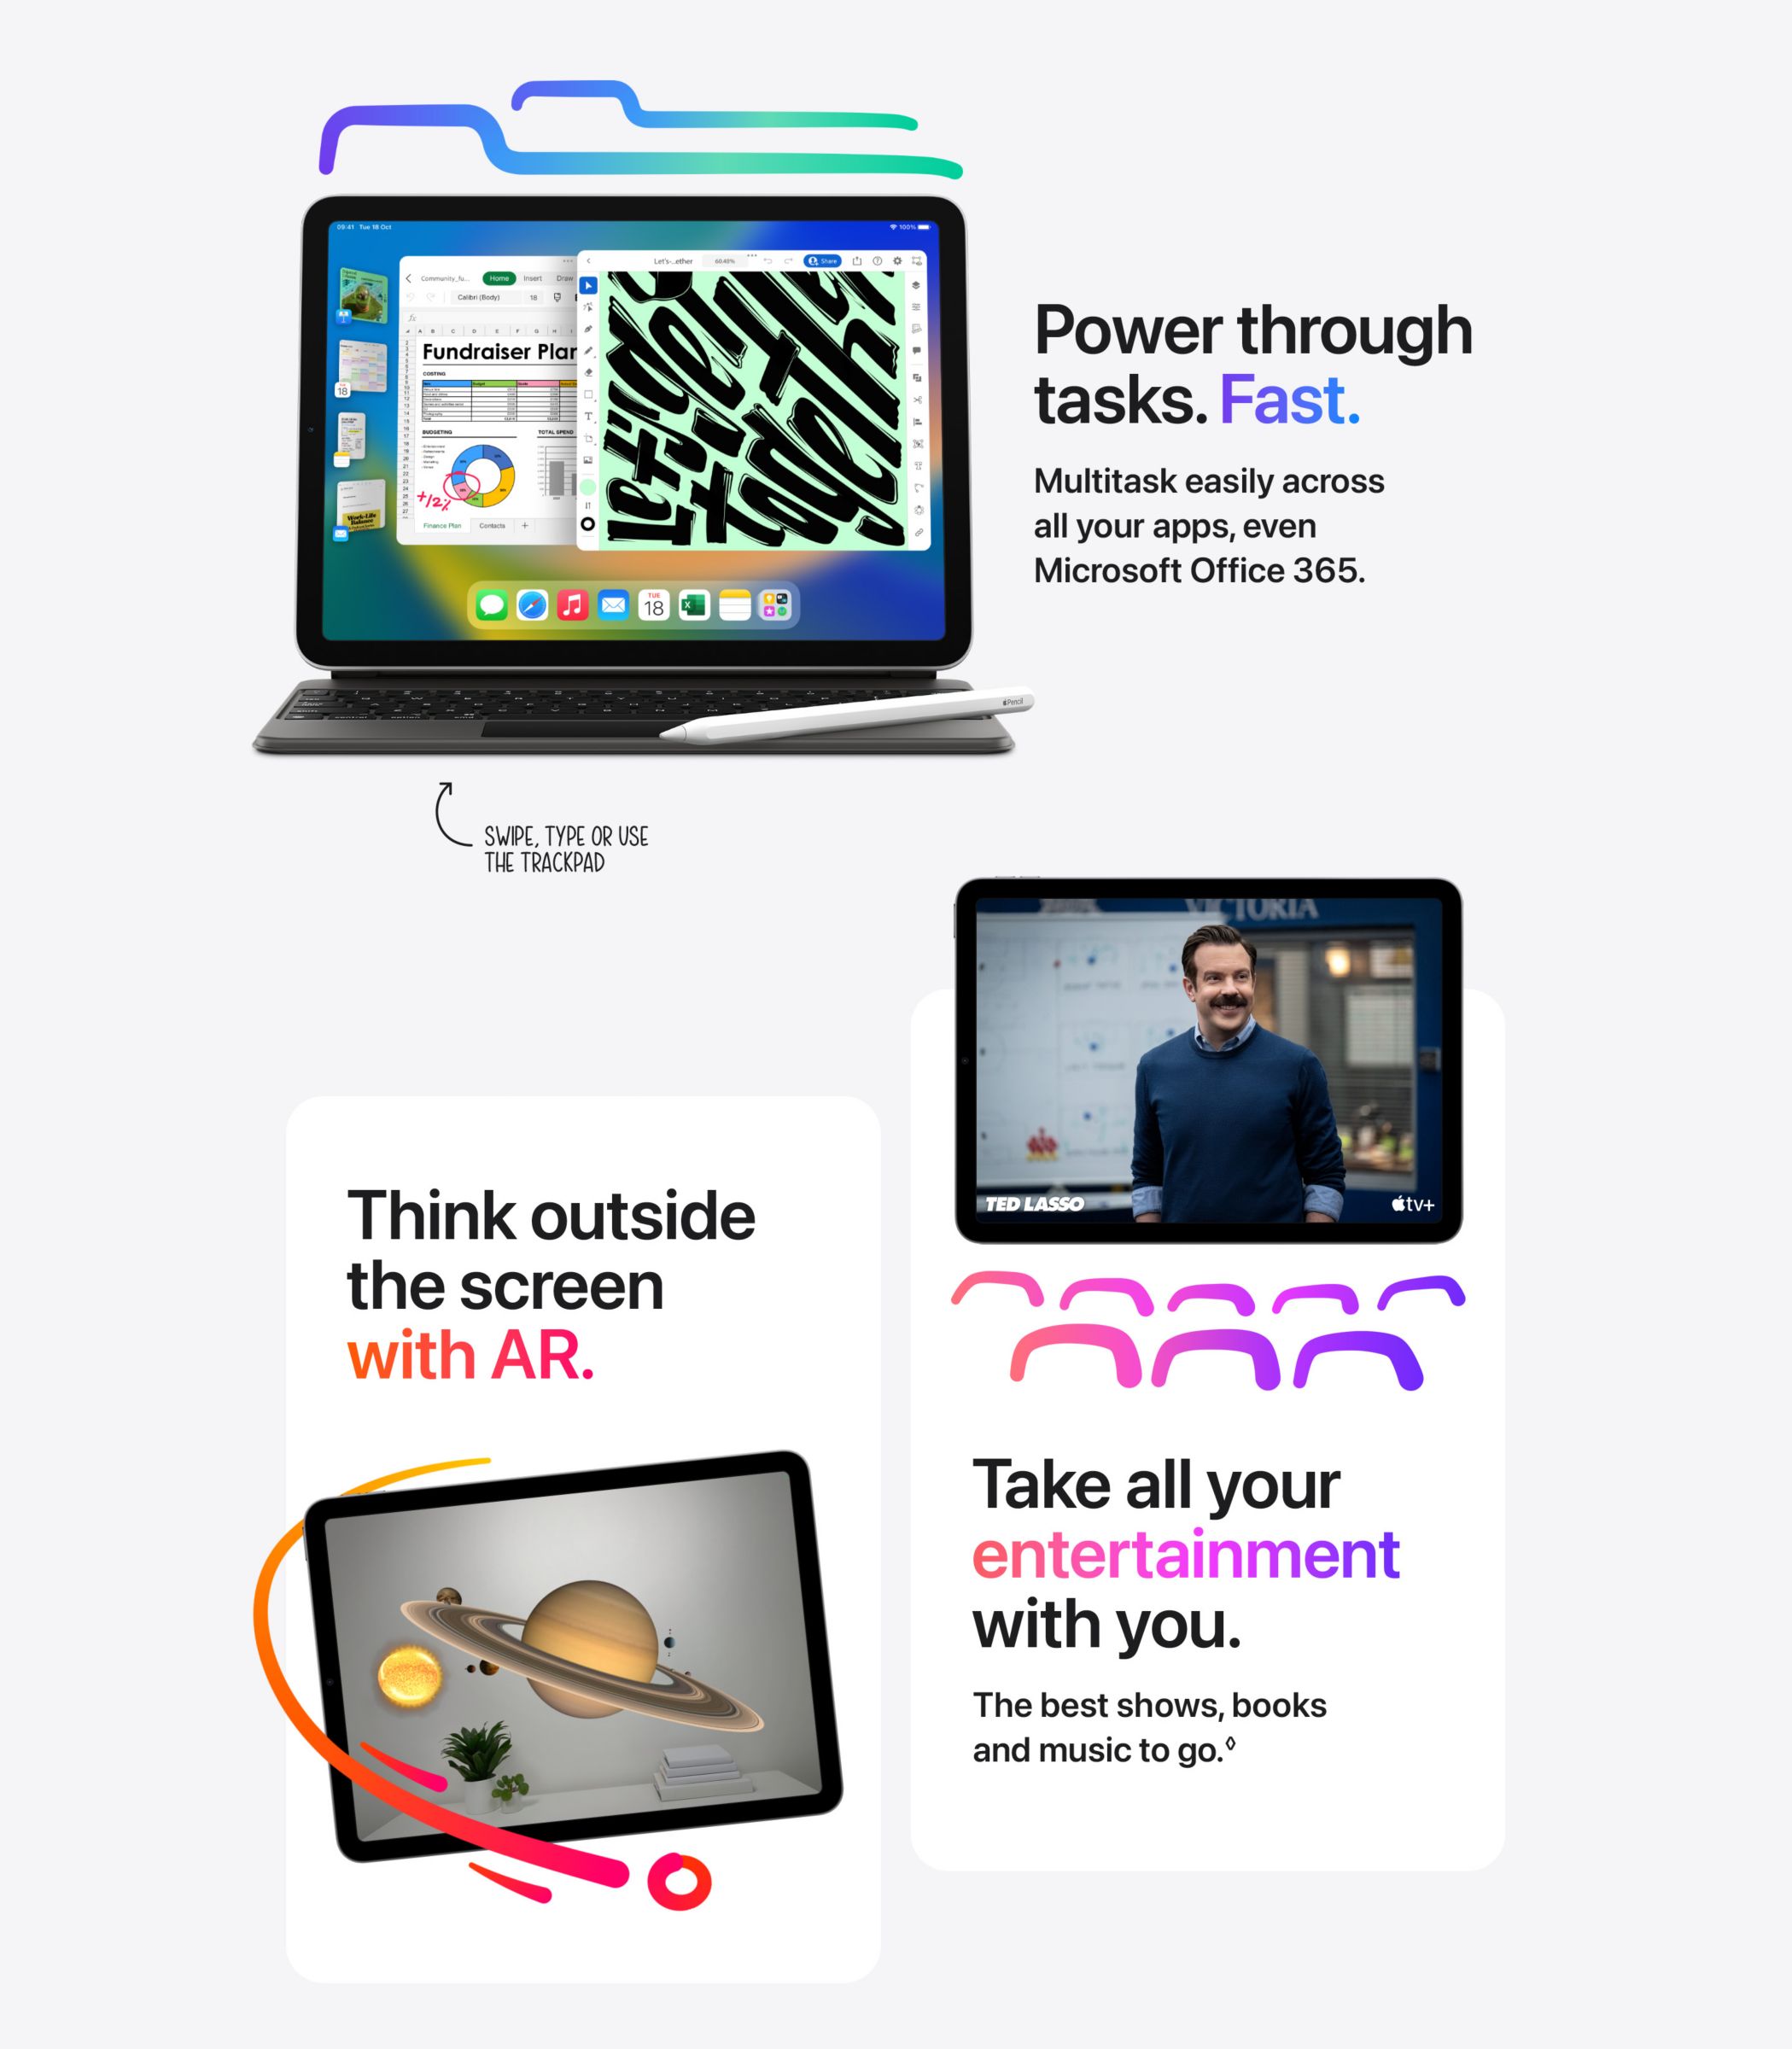 Apple Do More on iPad Power through tasks fast